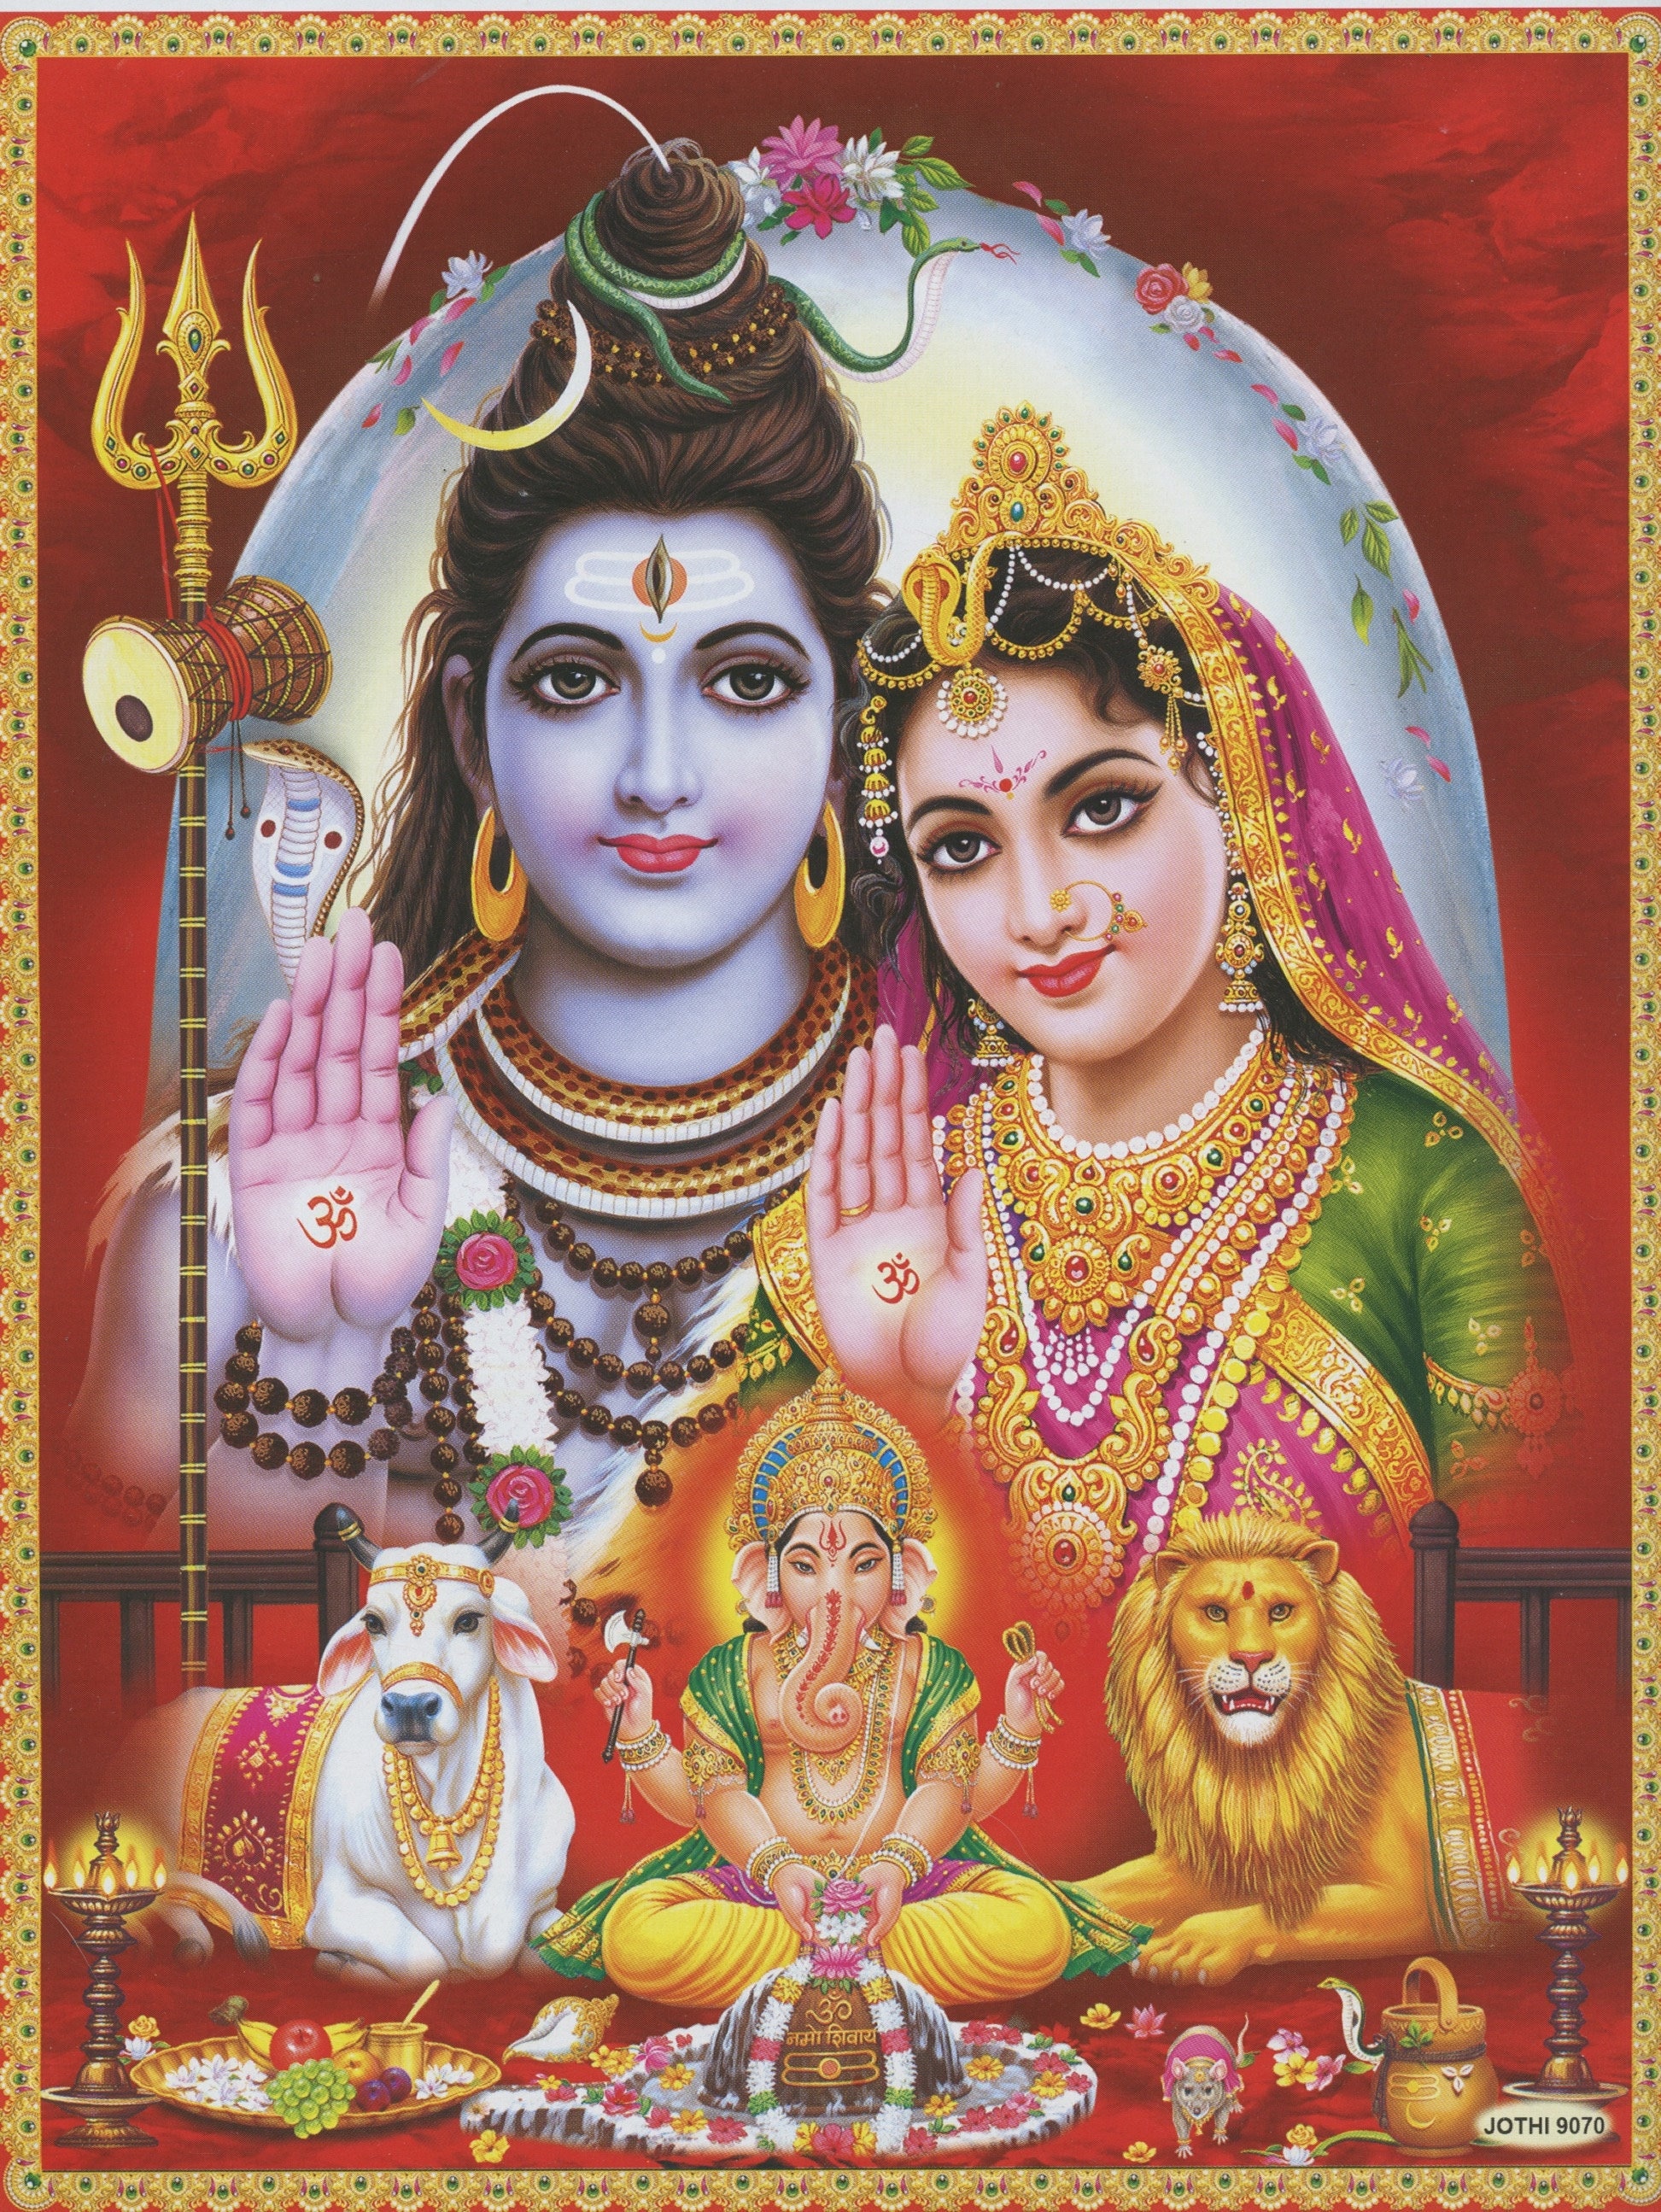 450 Lord Shiva Parvati Ganesh Images, Stock Photos & Vectors | Shutterstock